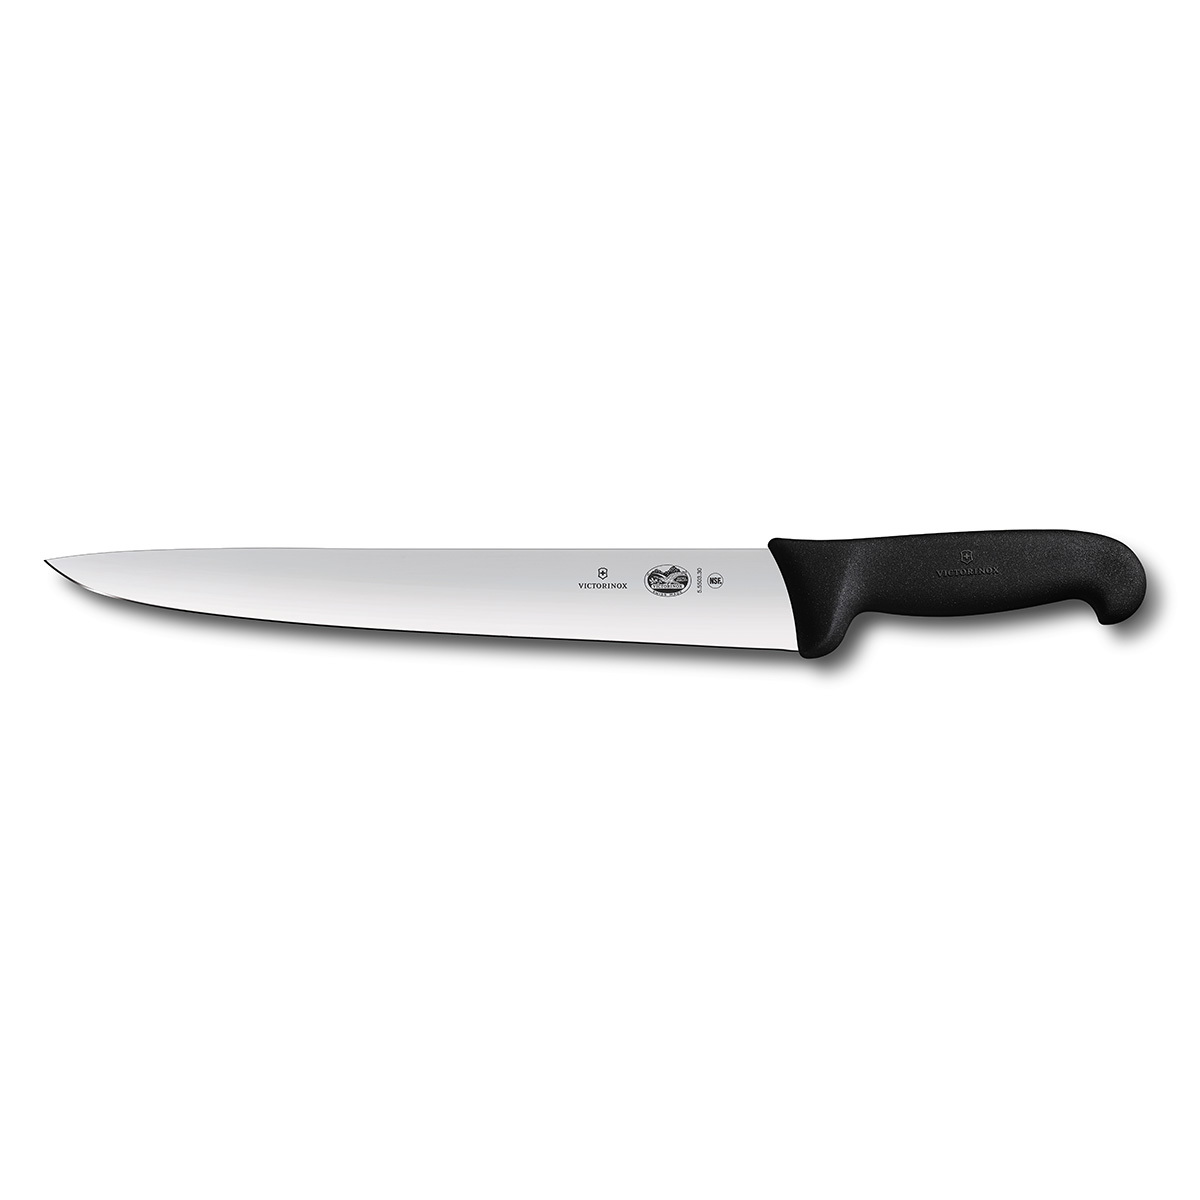 Кухонный нож стейка Victorinox 5.5503.30 кухонный мясной нож victorinox 5 5203 20